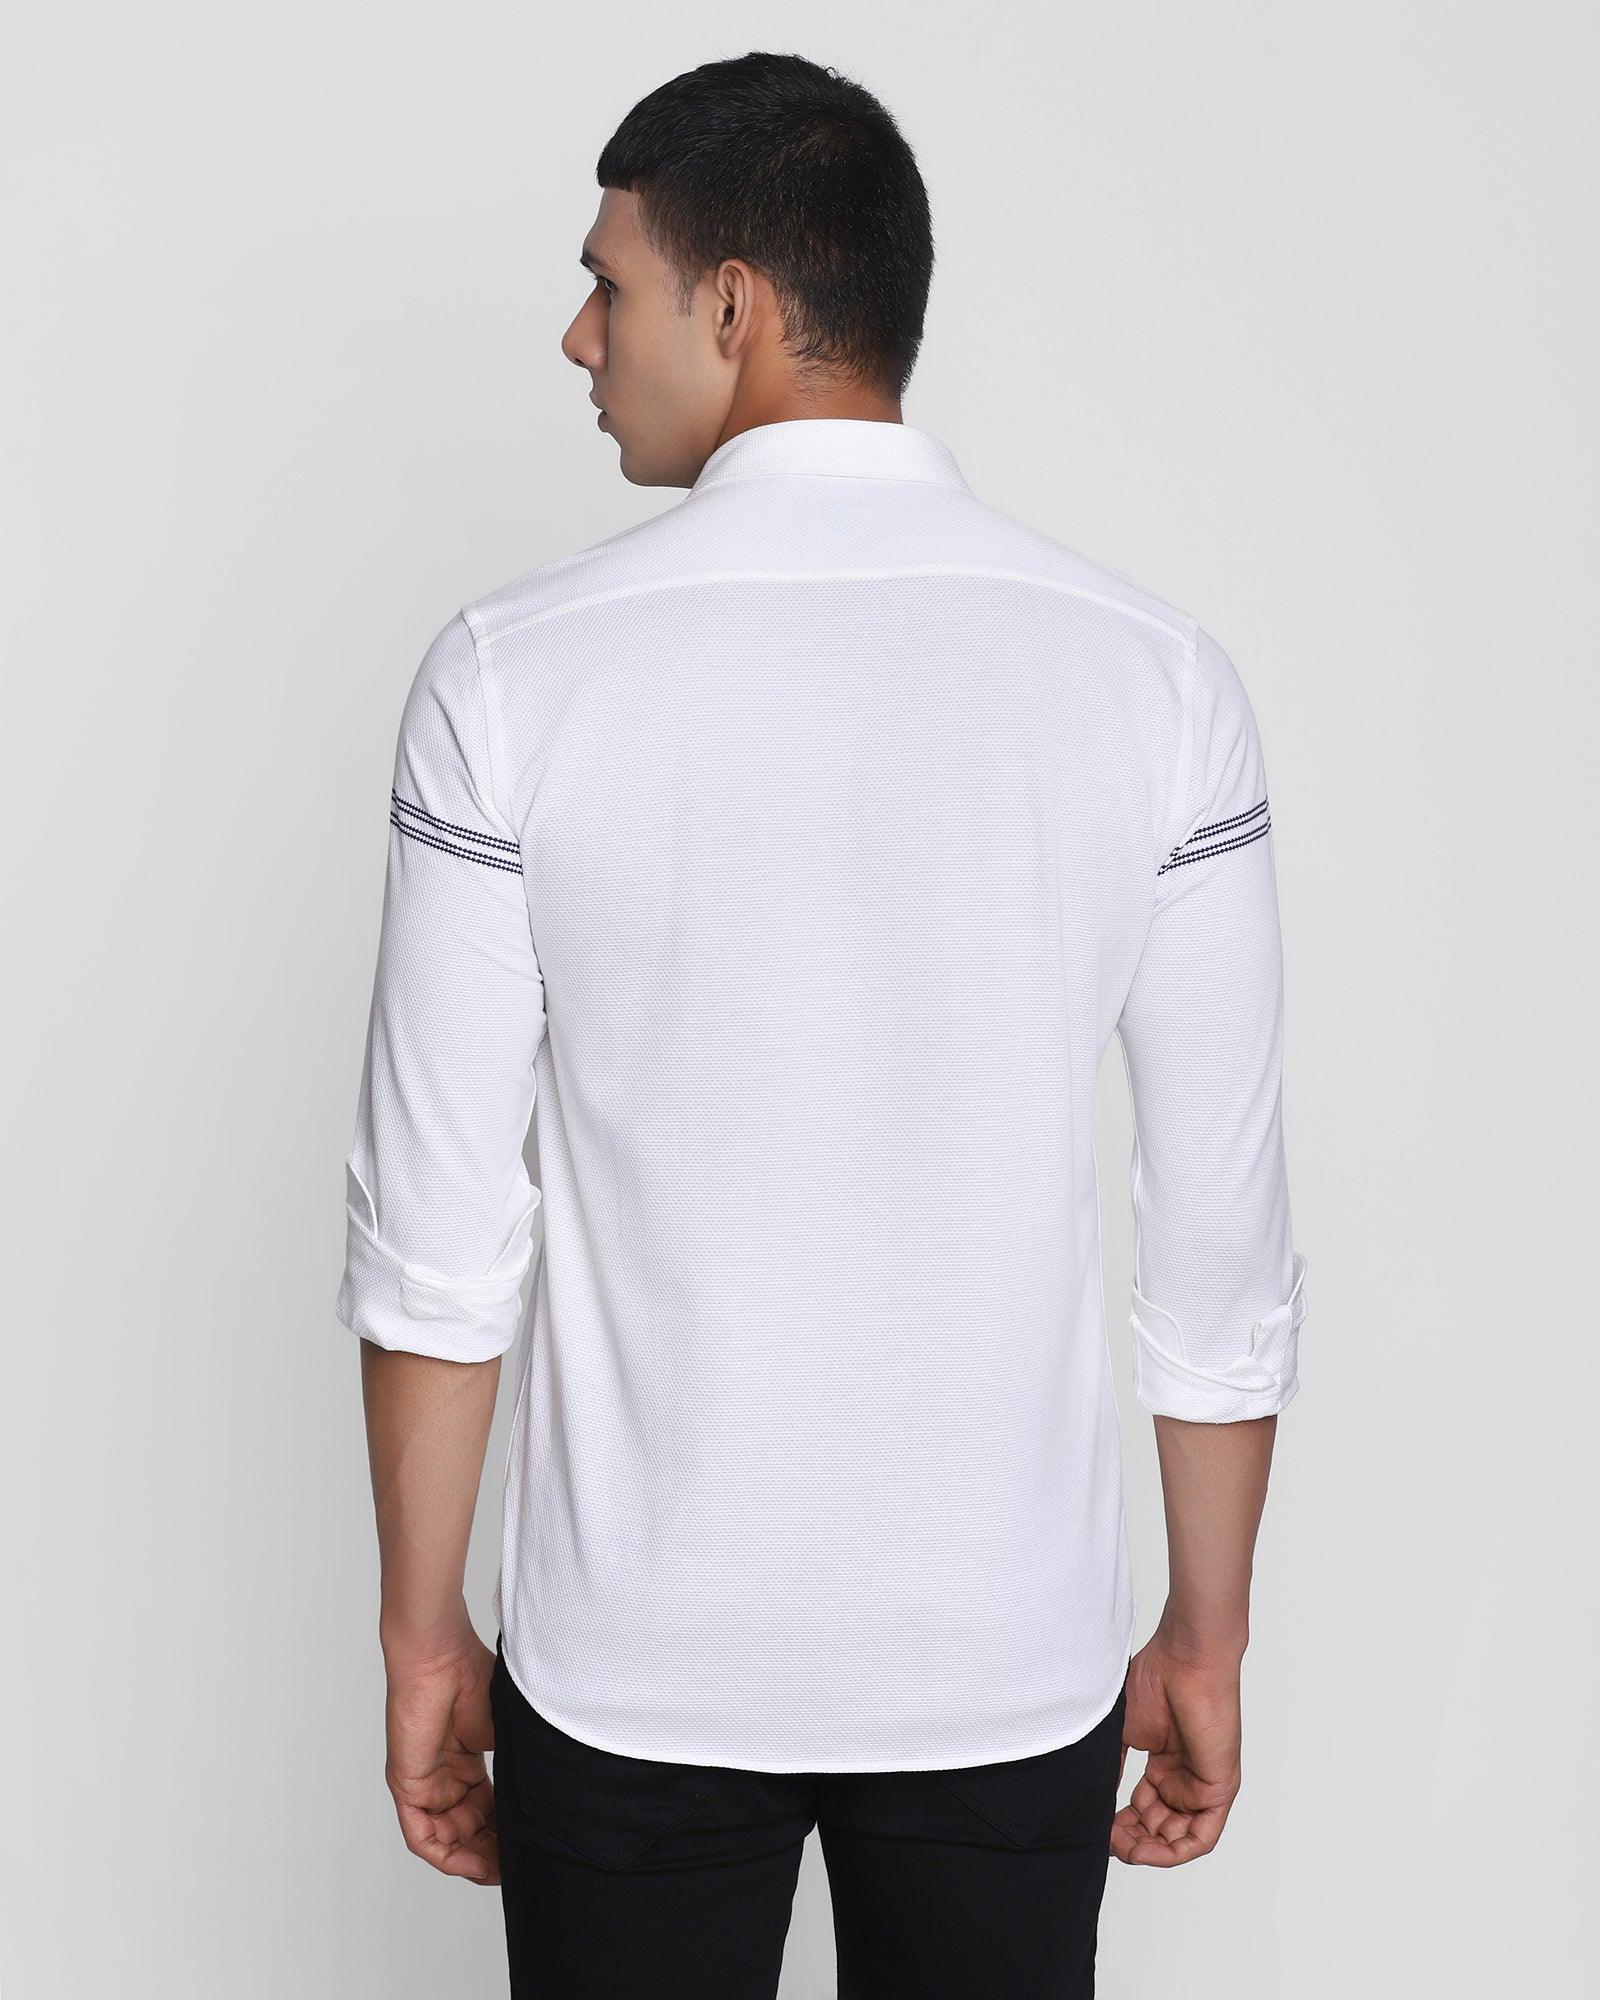 Casual White Textured Shirt - Joey